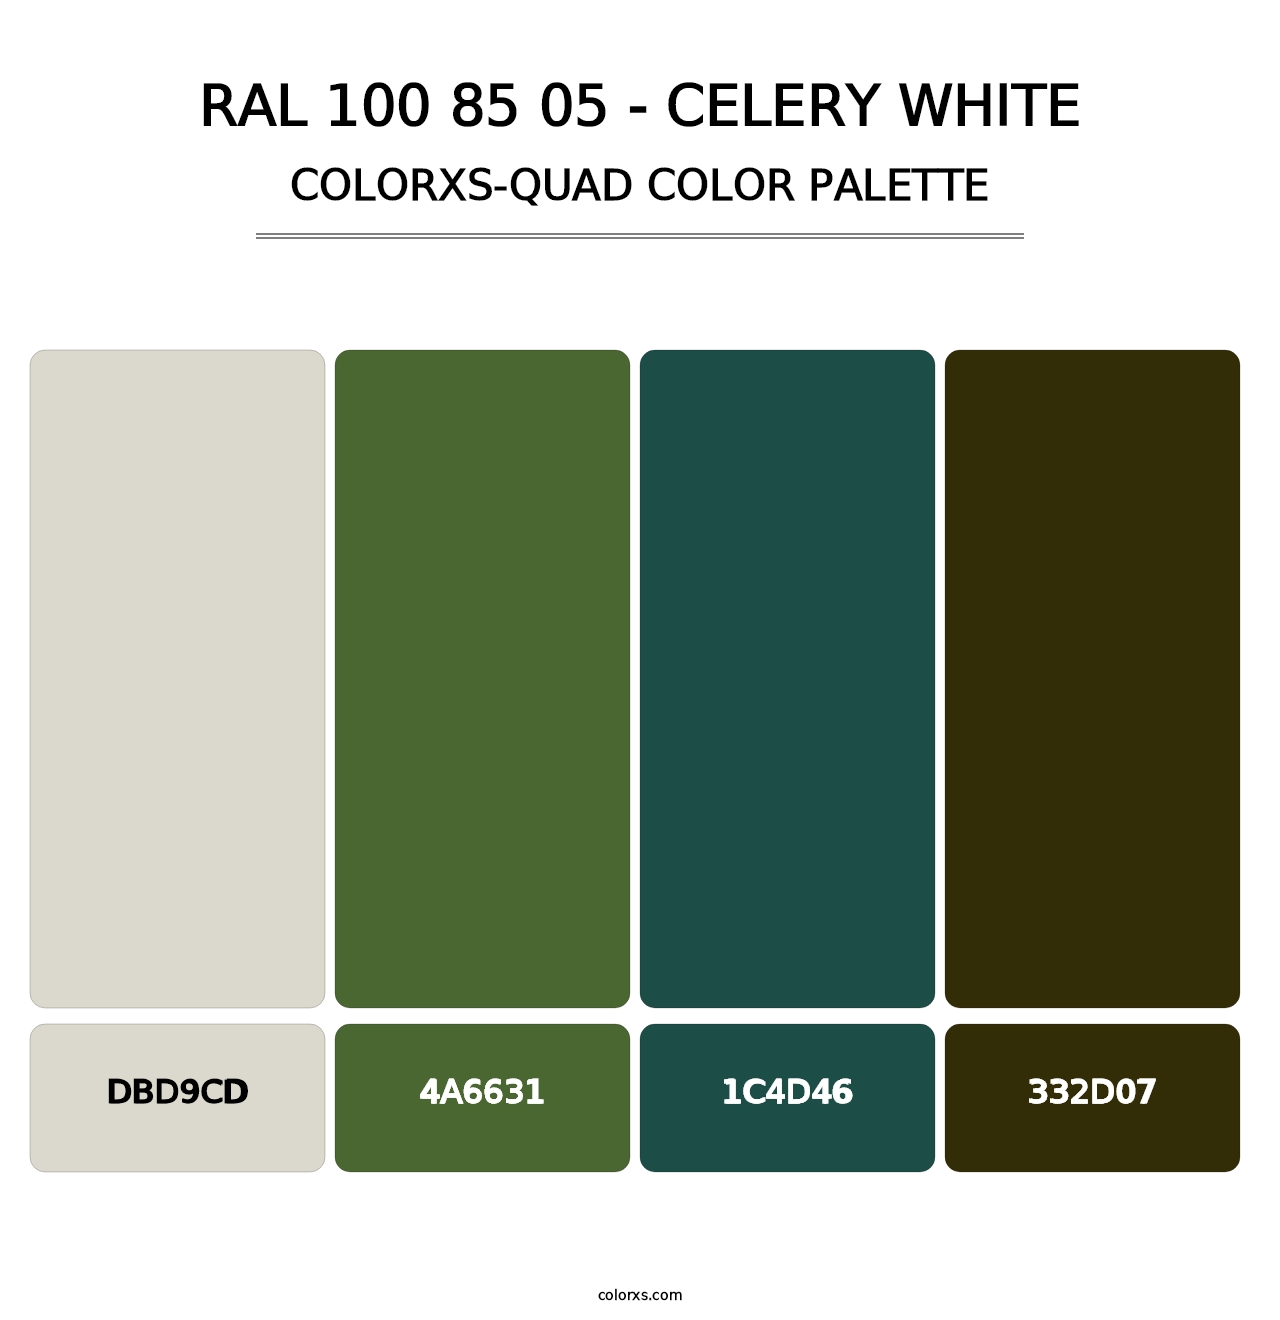 RAL 100 85 05 - Celery White - Colorxs Quad Palette